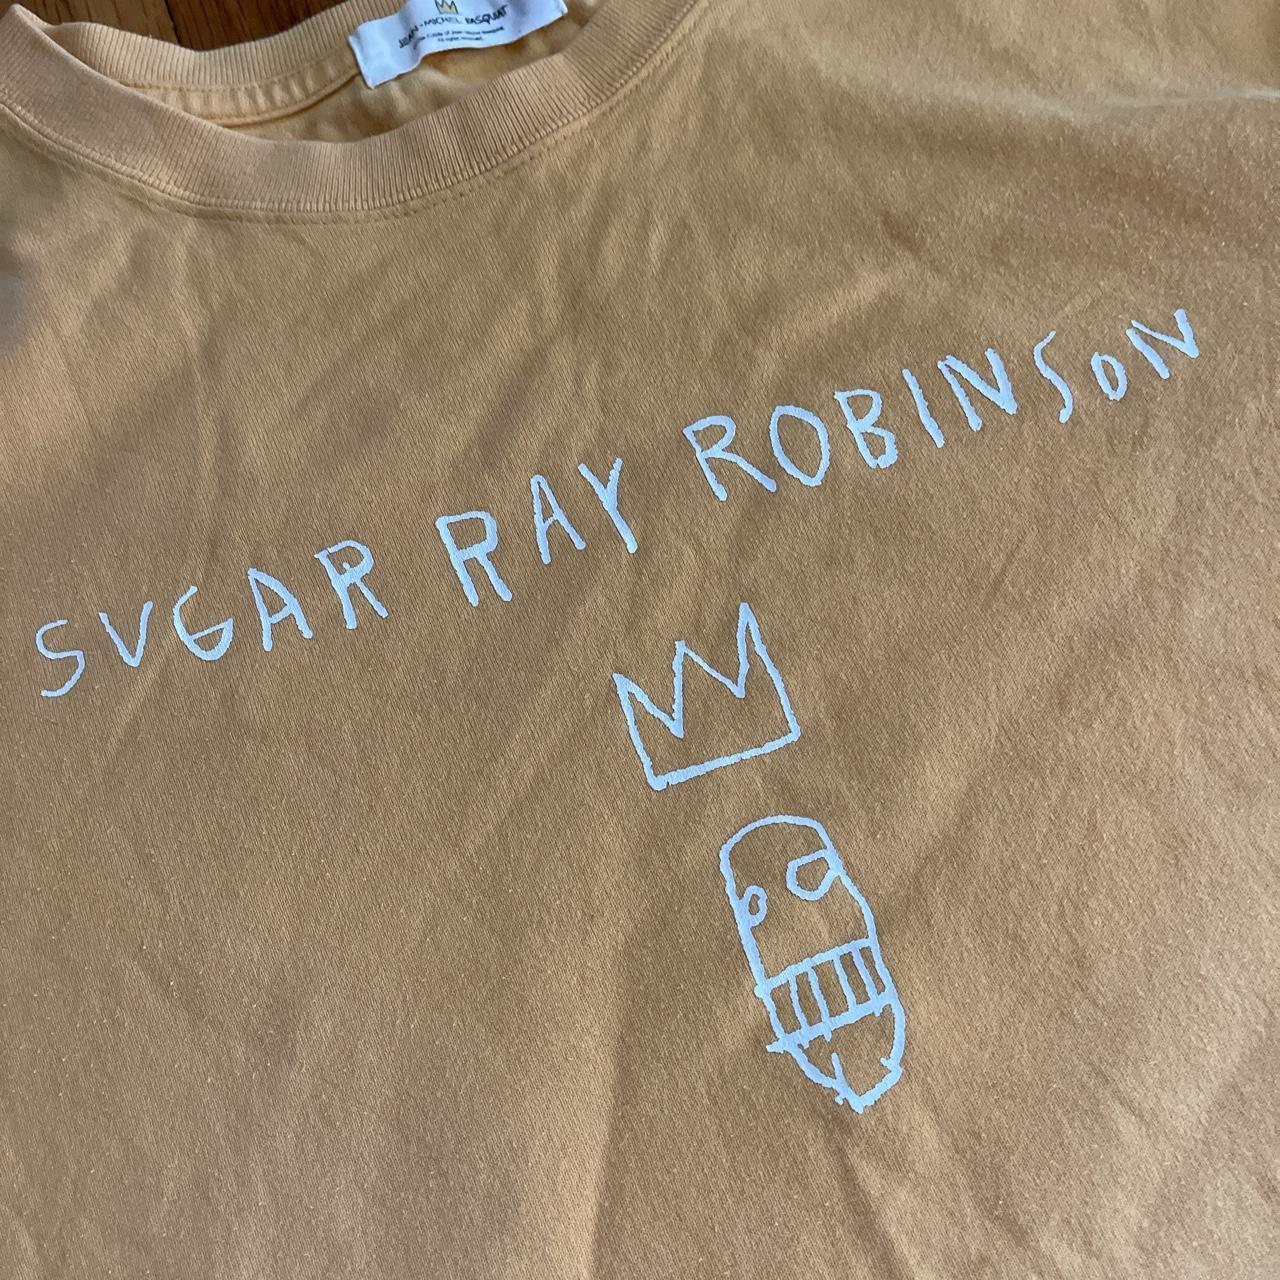 Basquiat Sugar Ray Robinson - Black